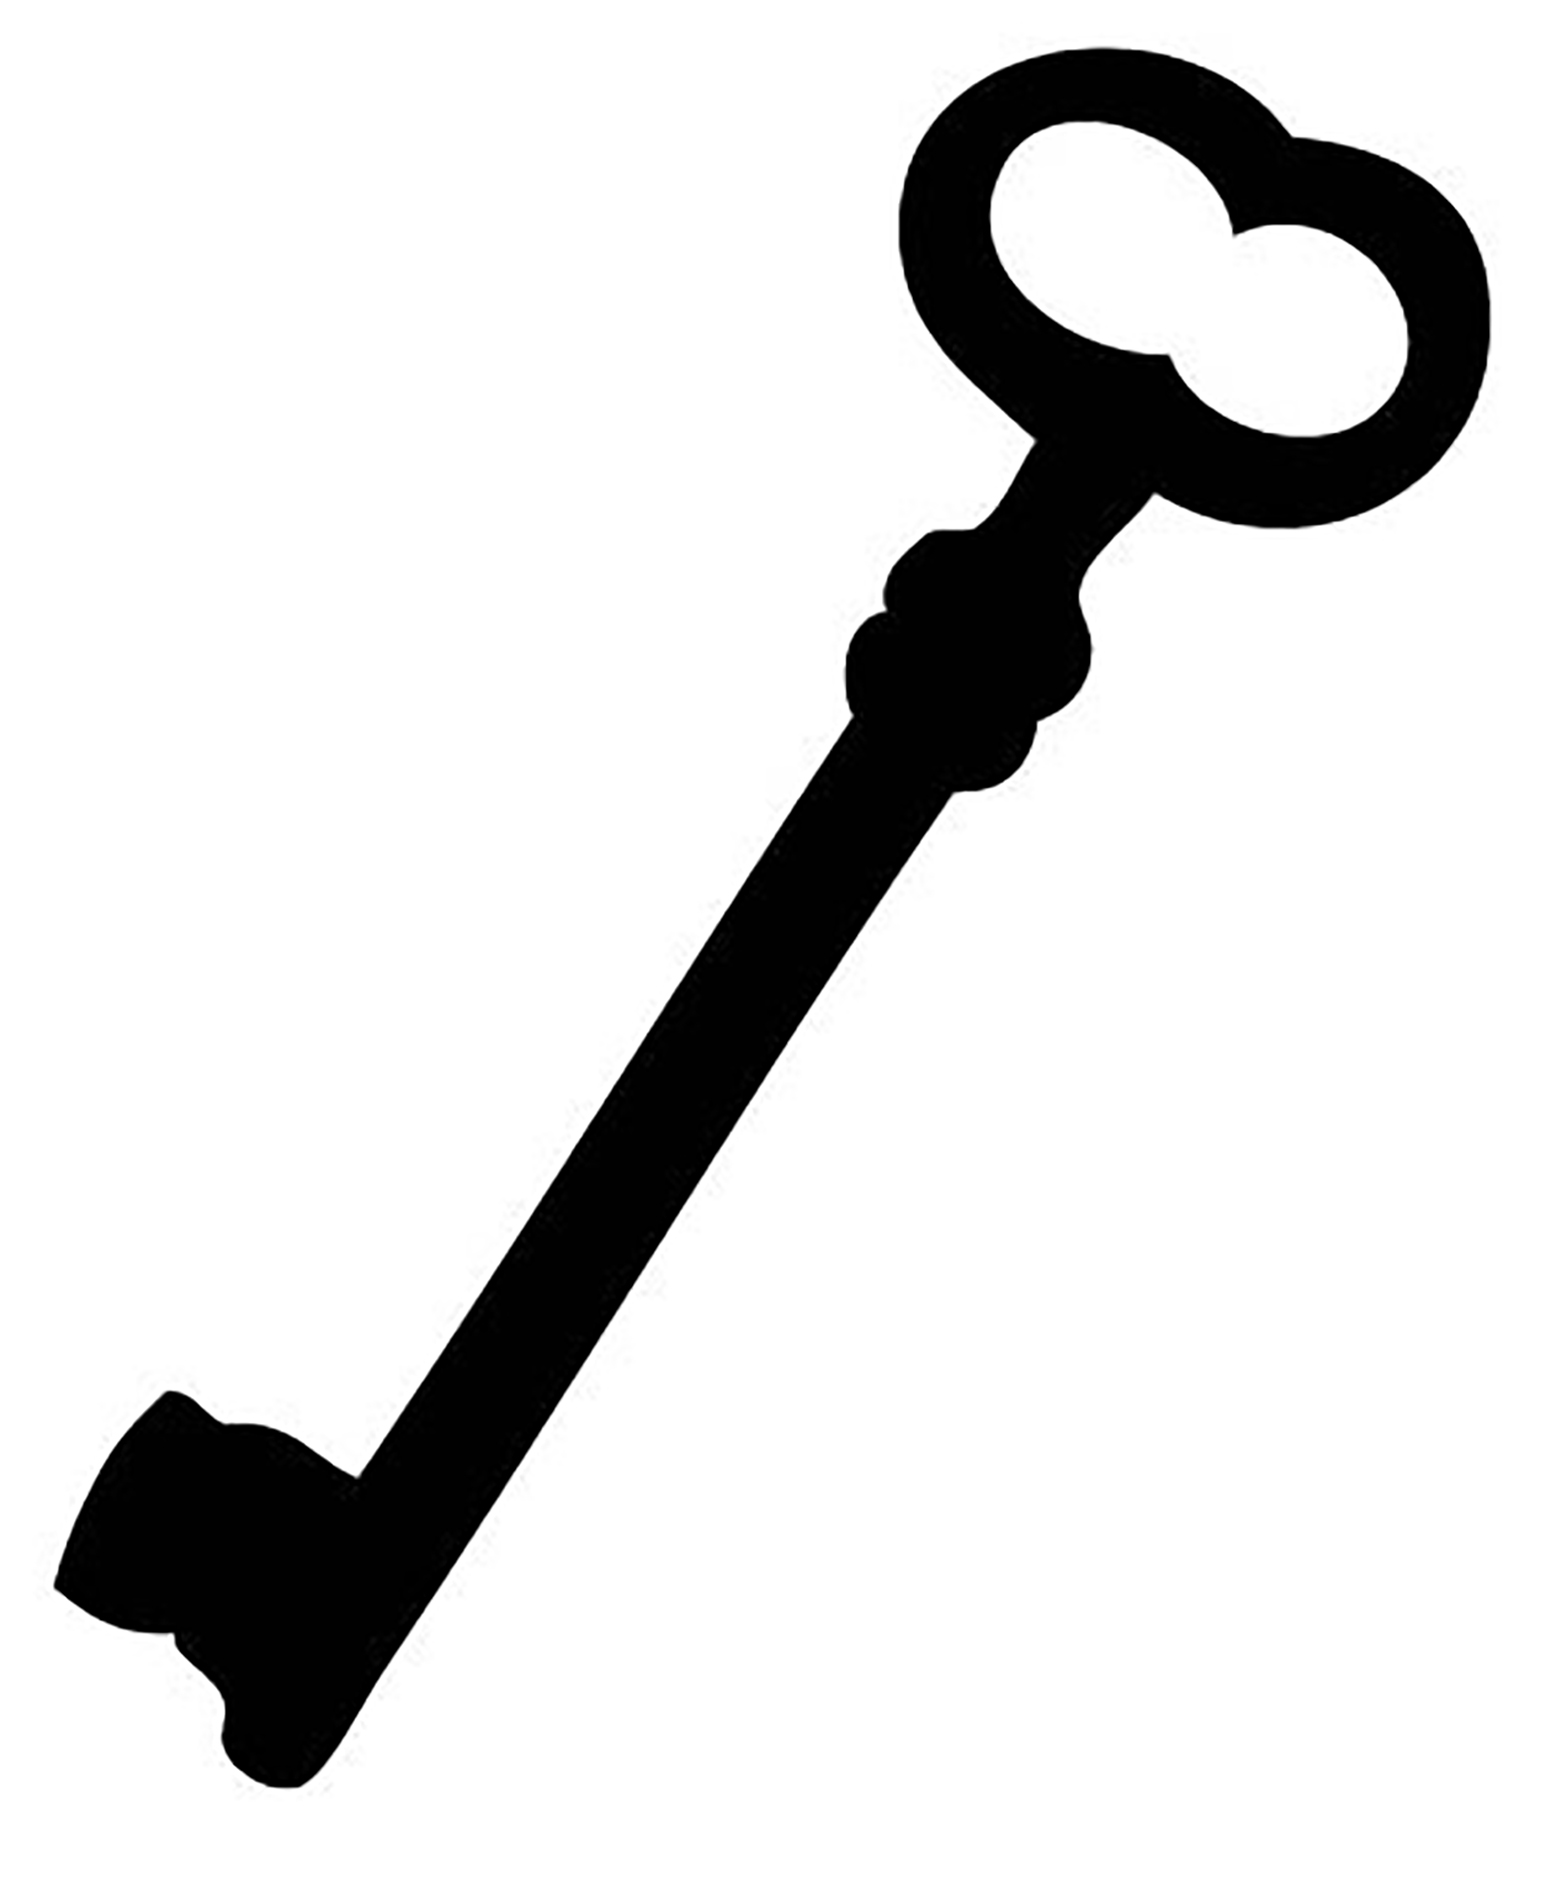 Key черный. Ключ. Черный ключ. Старинный ключ силуэт. Ключ рисовать.